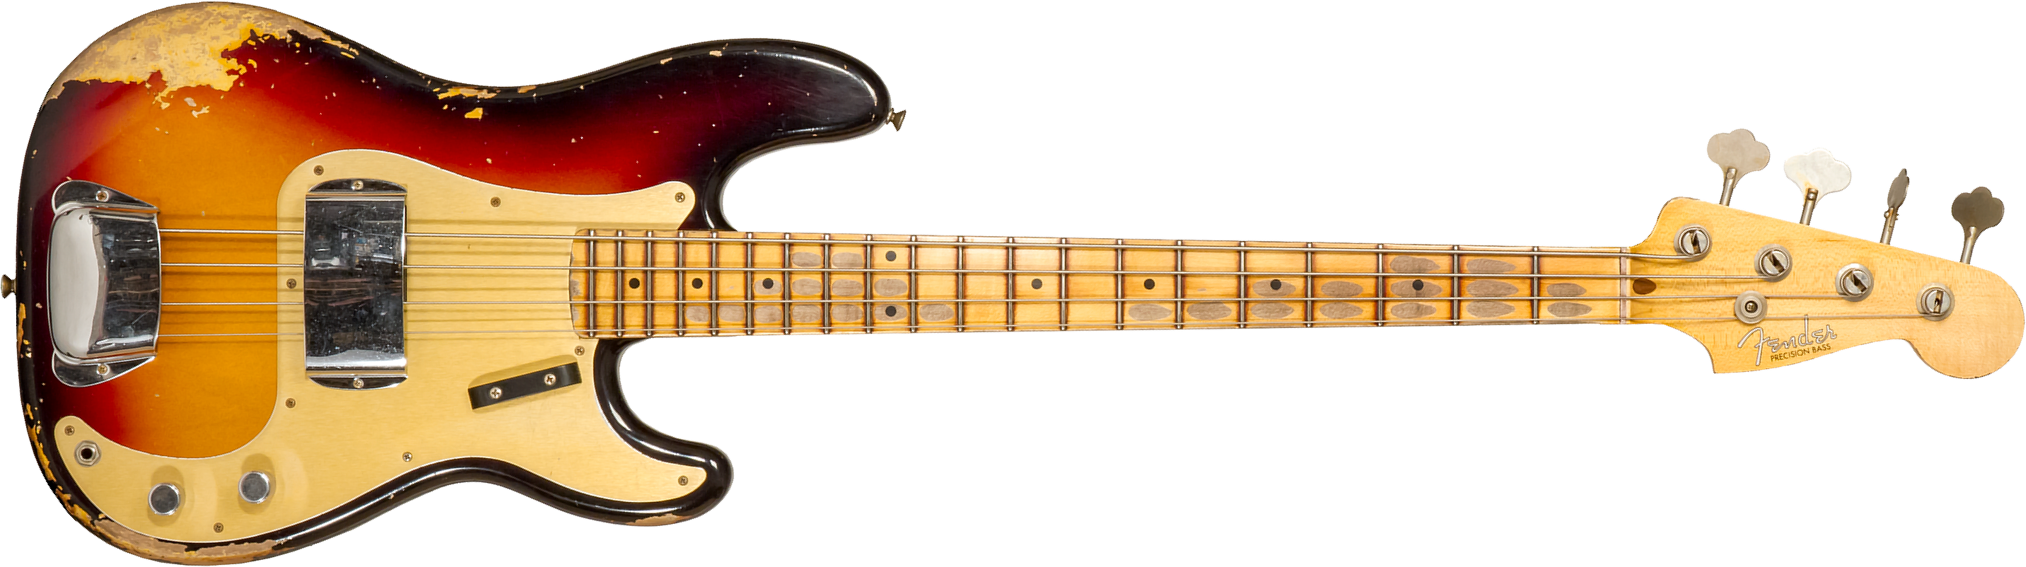 Fender Custom Shop Precision Bass 1958 Mn #cz573256 - Heavy Relic 3-color Sunburst - Solid body elektrische bas - Main picture